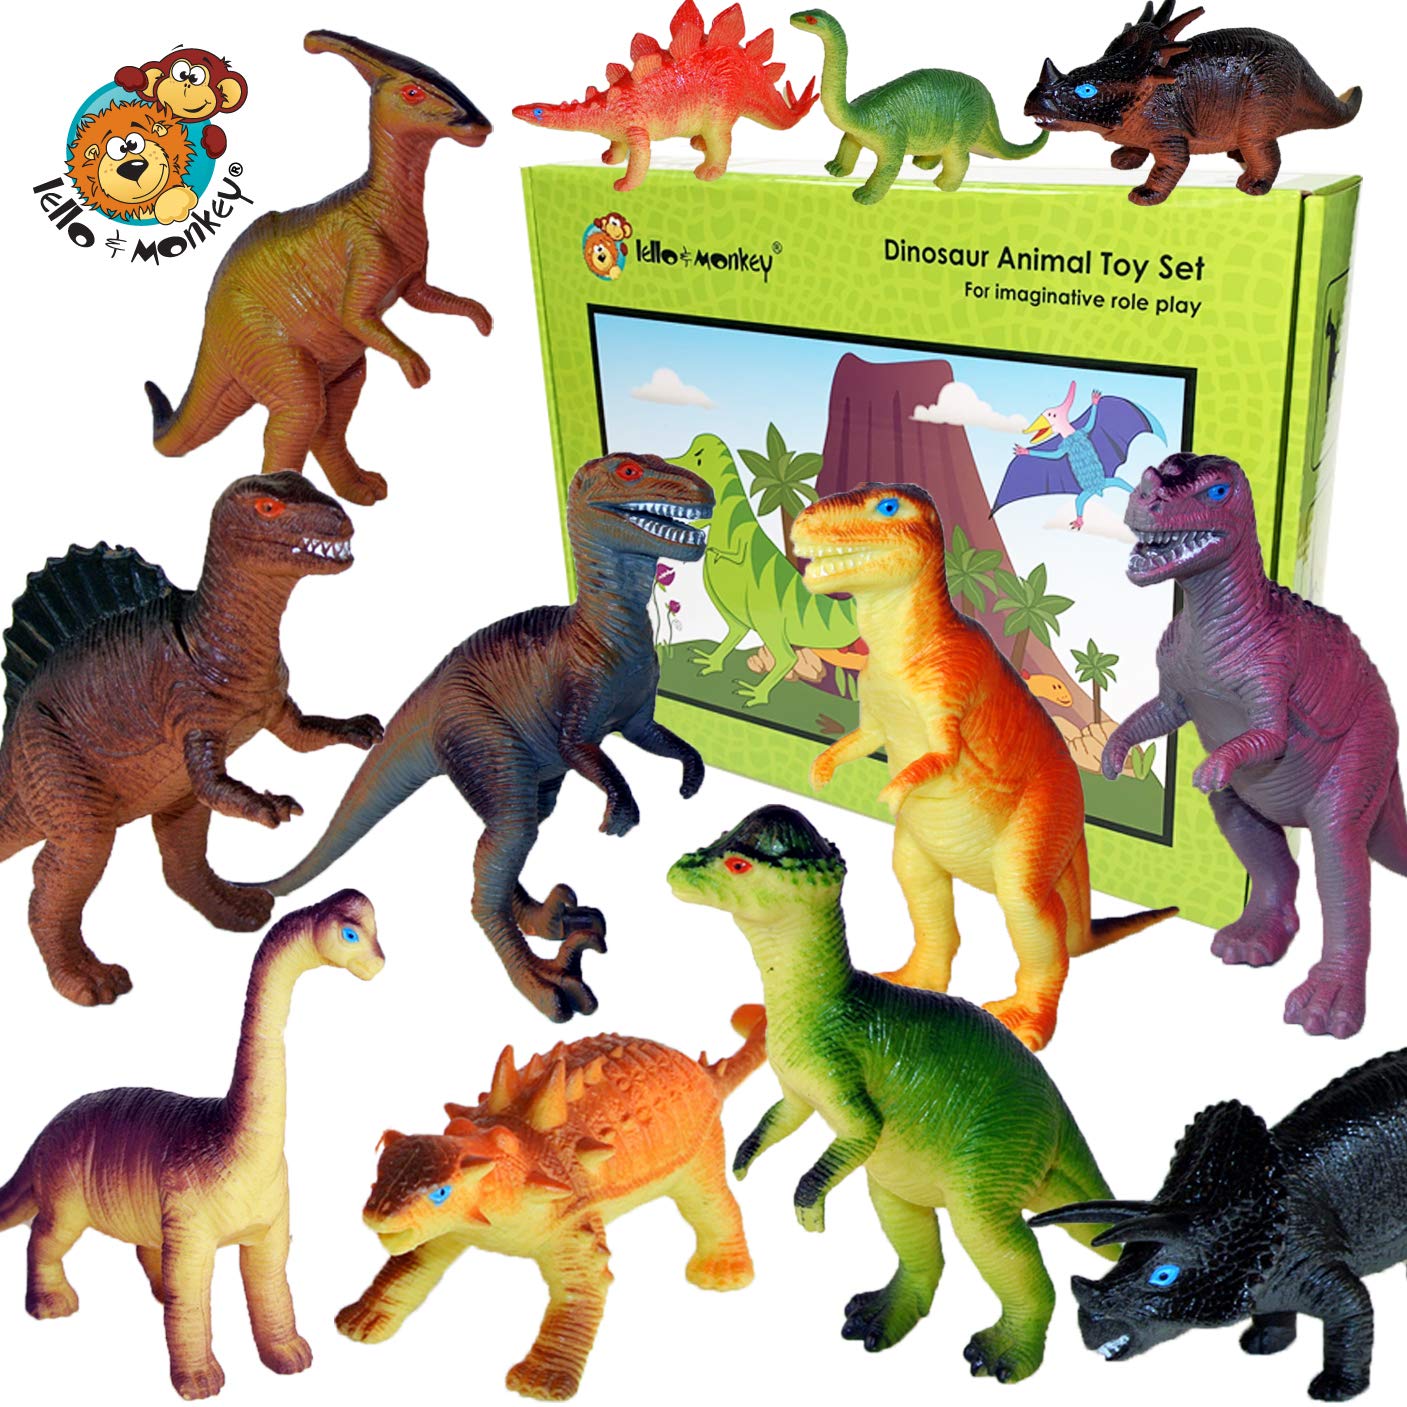 Large 7 inch dinosaur Lello & Monkey Dinosaur toys set of 12 plastic dinosaurs 